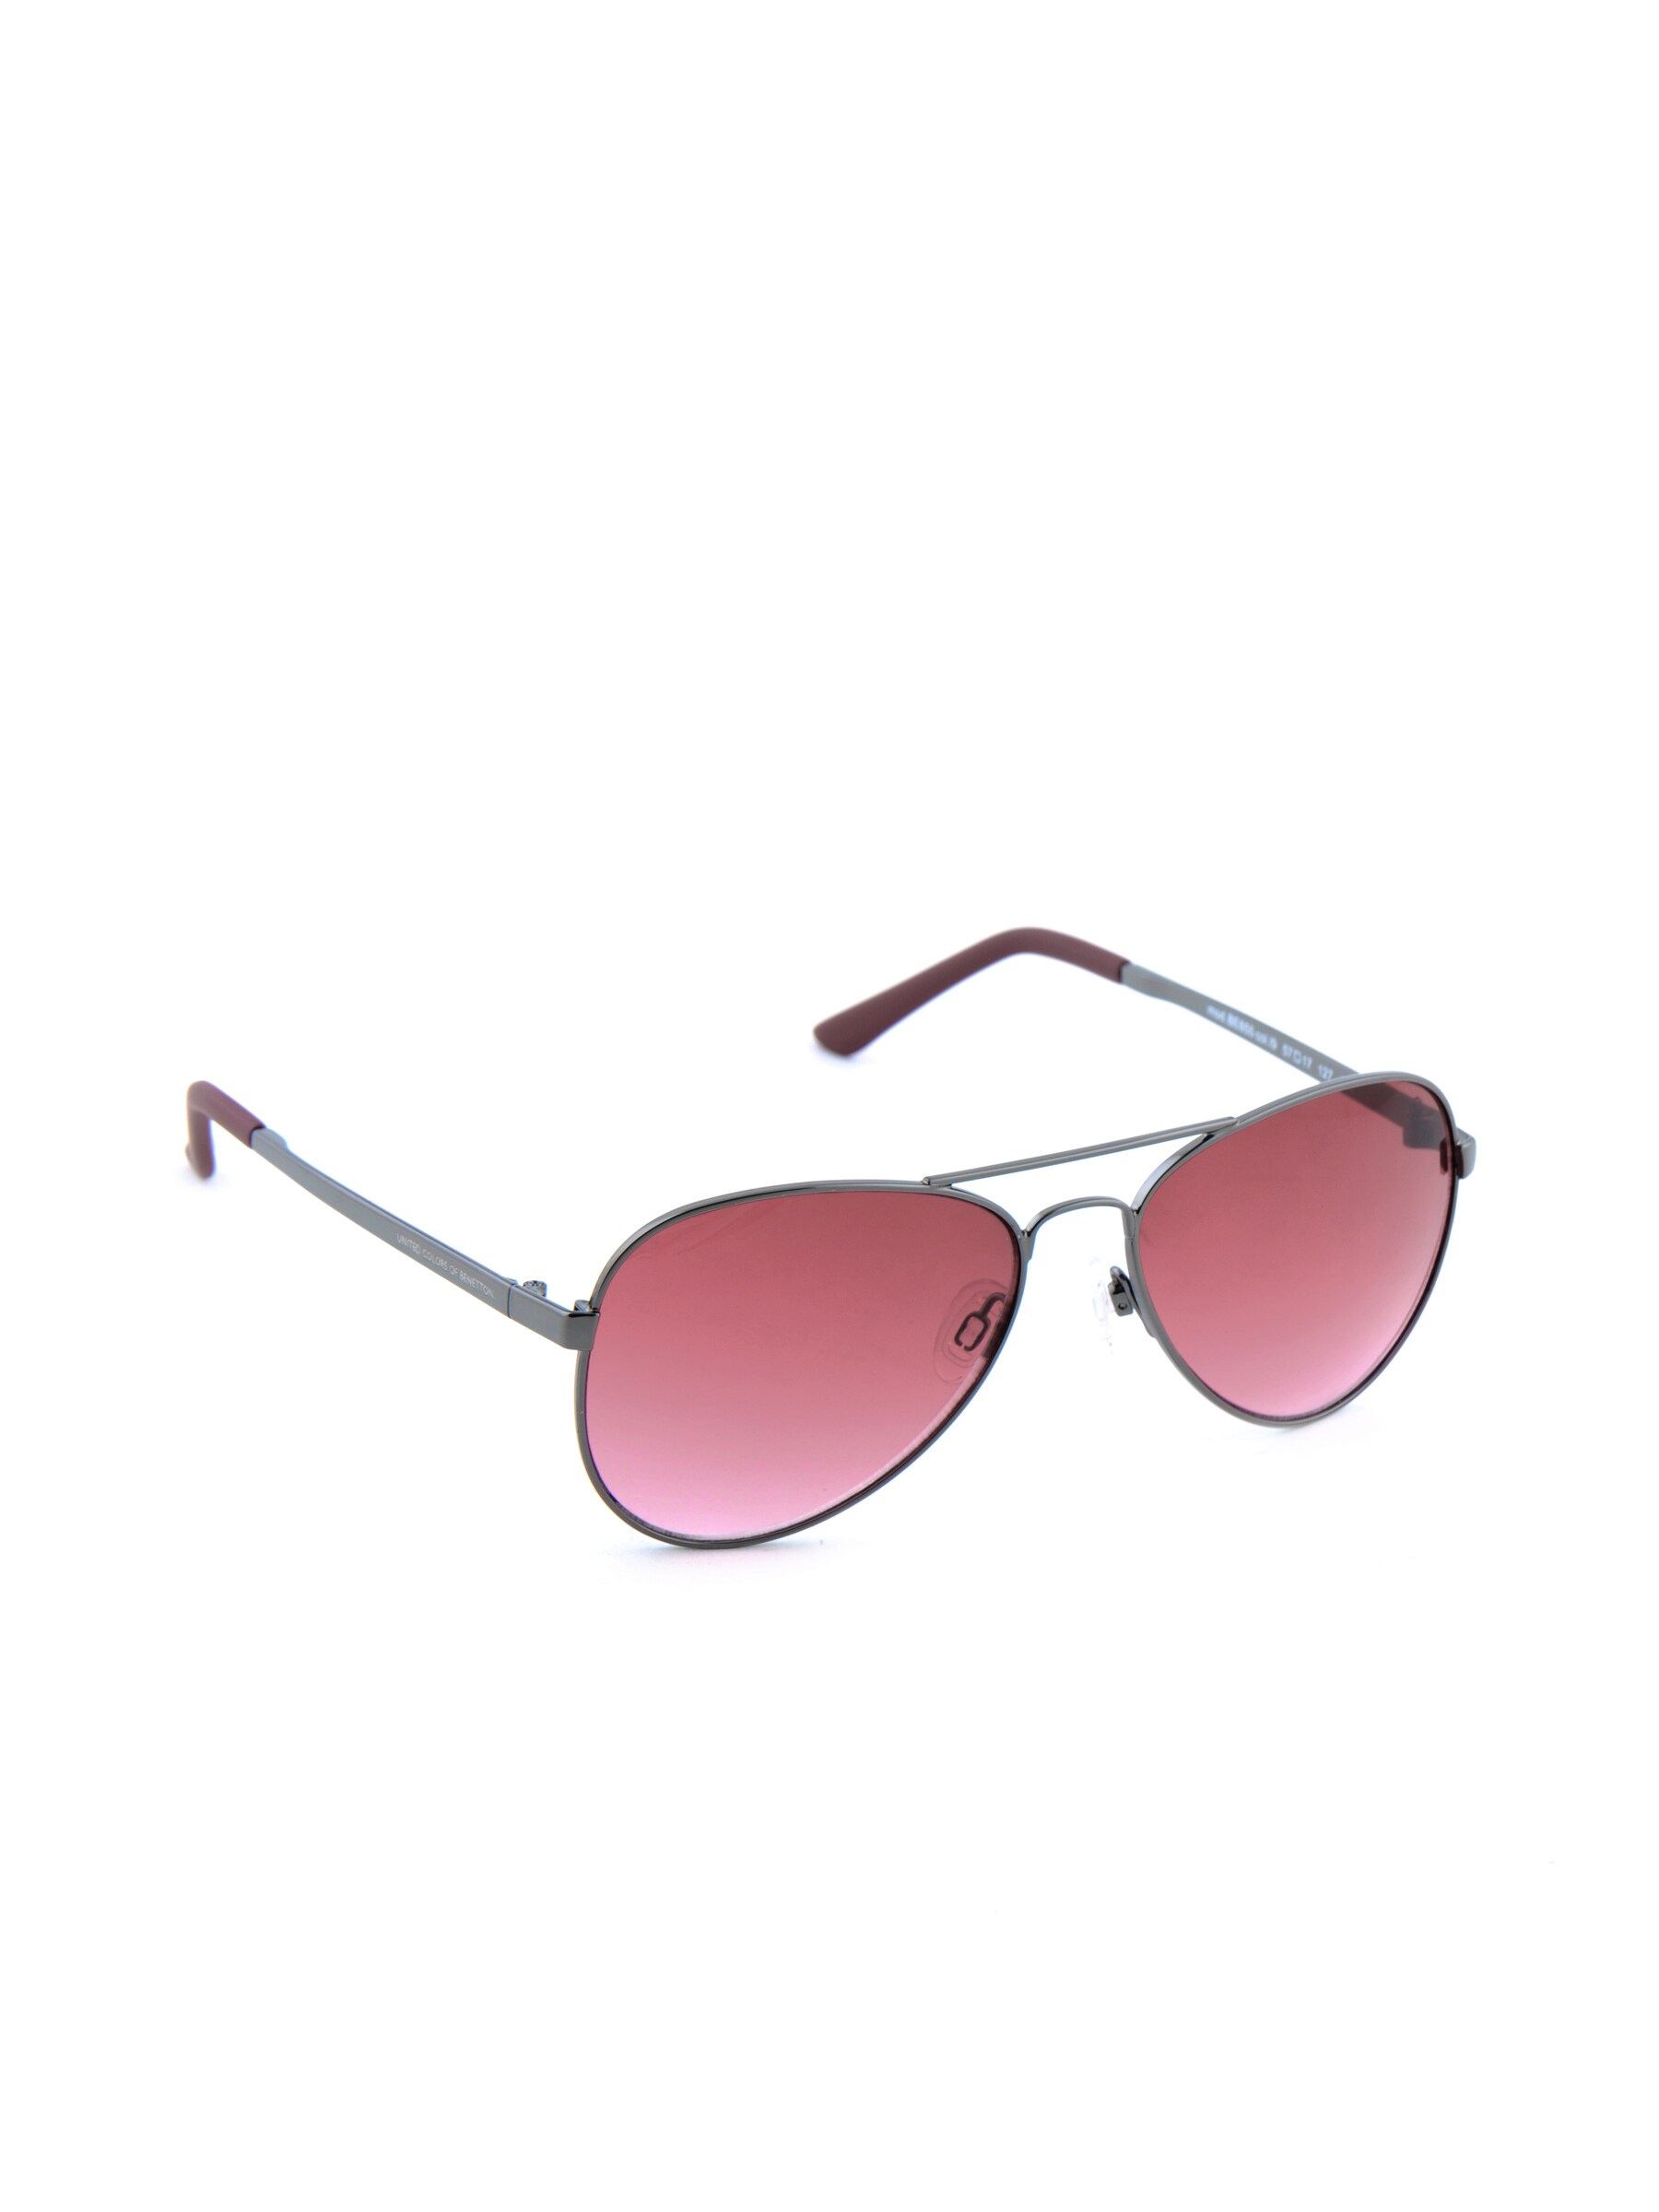 United Colors of Benetton Men Funky Eyewear Pink Sunglasses